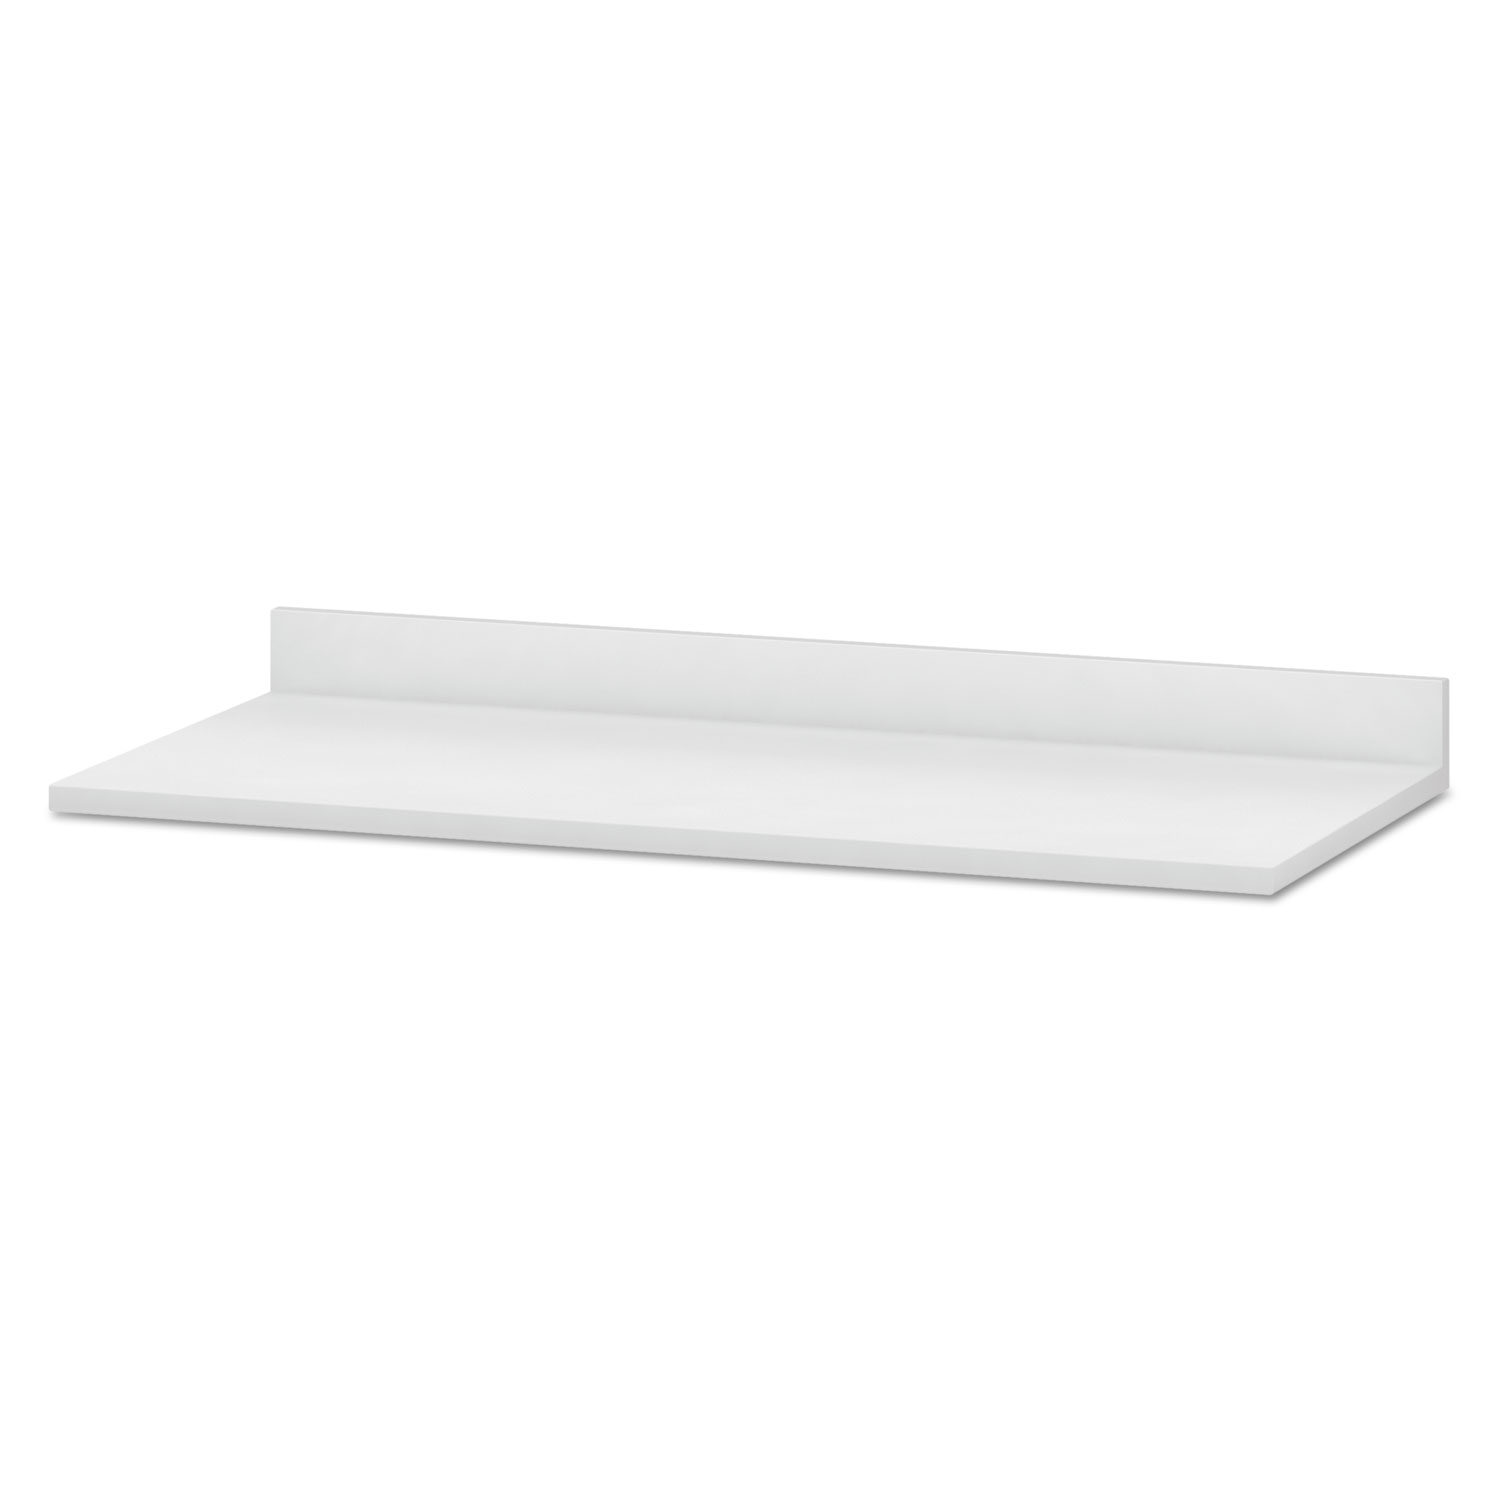 Hospitality Cabinet Modular Countertop, 54w x 25d x 4-3/4h, Brilliant White